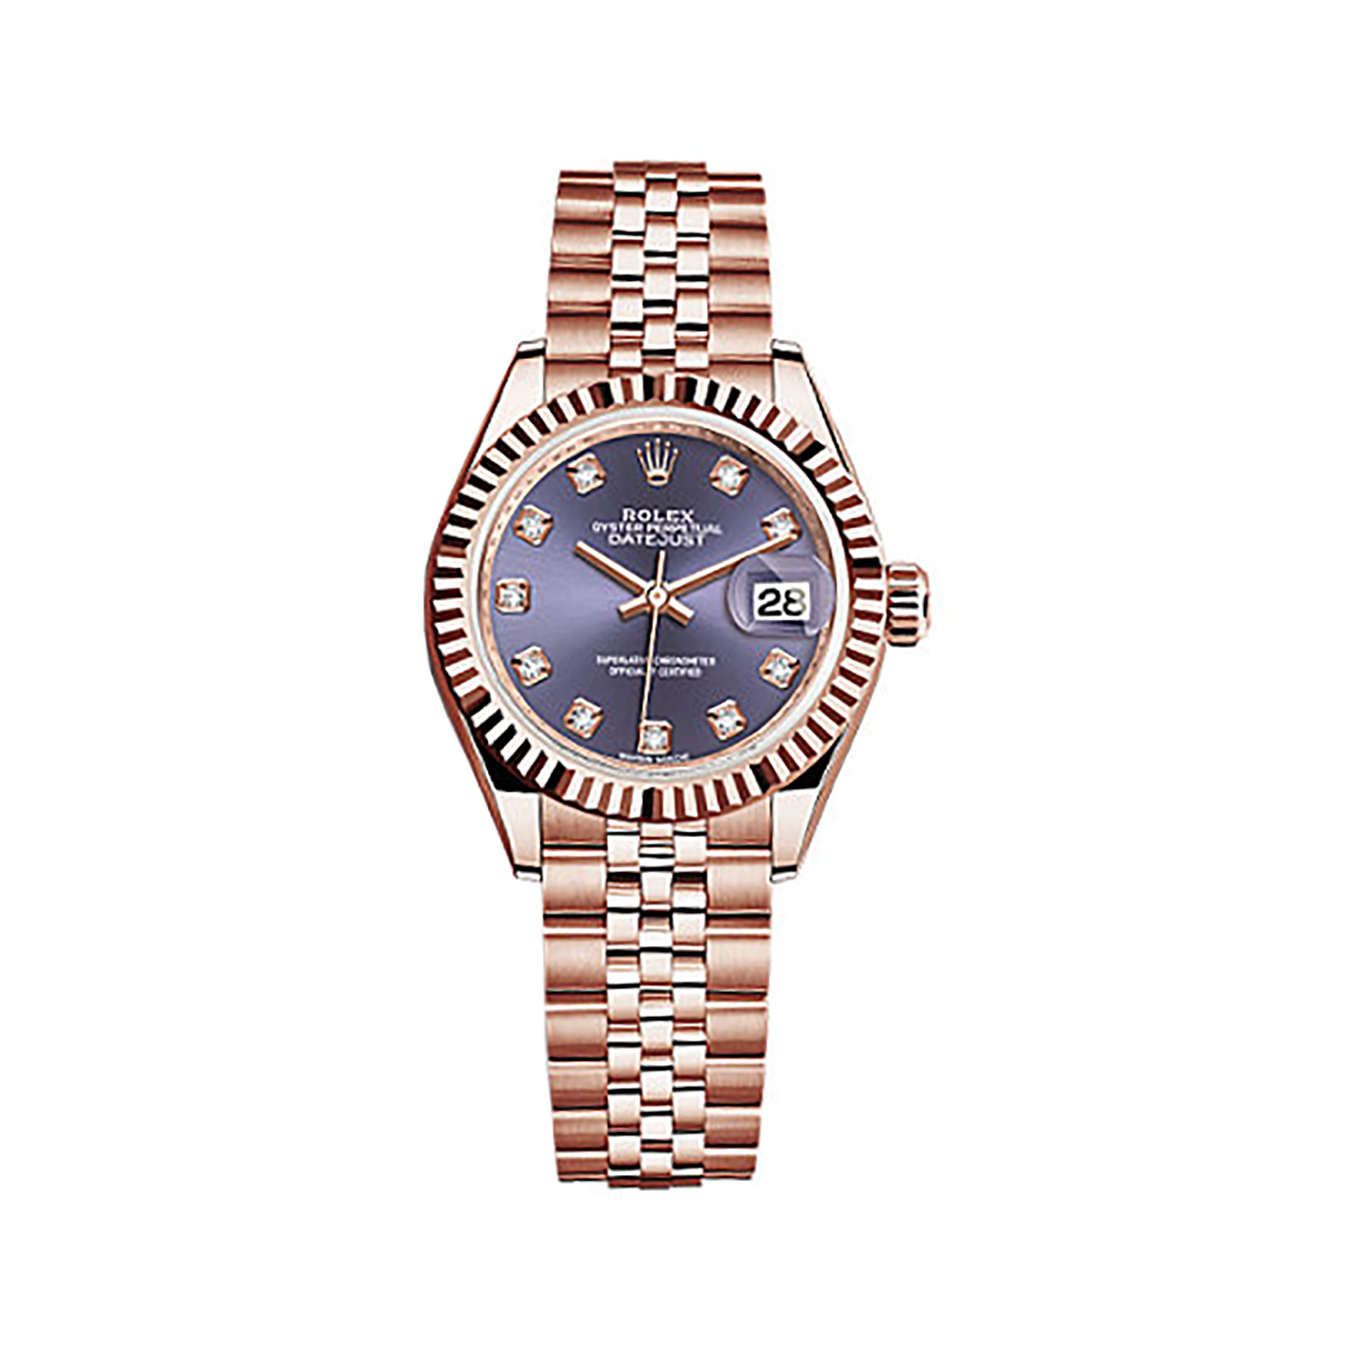 Lady-Datejust 28 279175 Rose Gold Watch (Aubergine Set with Diamonds)